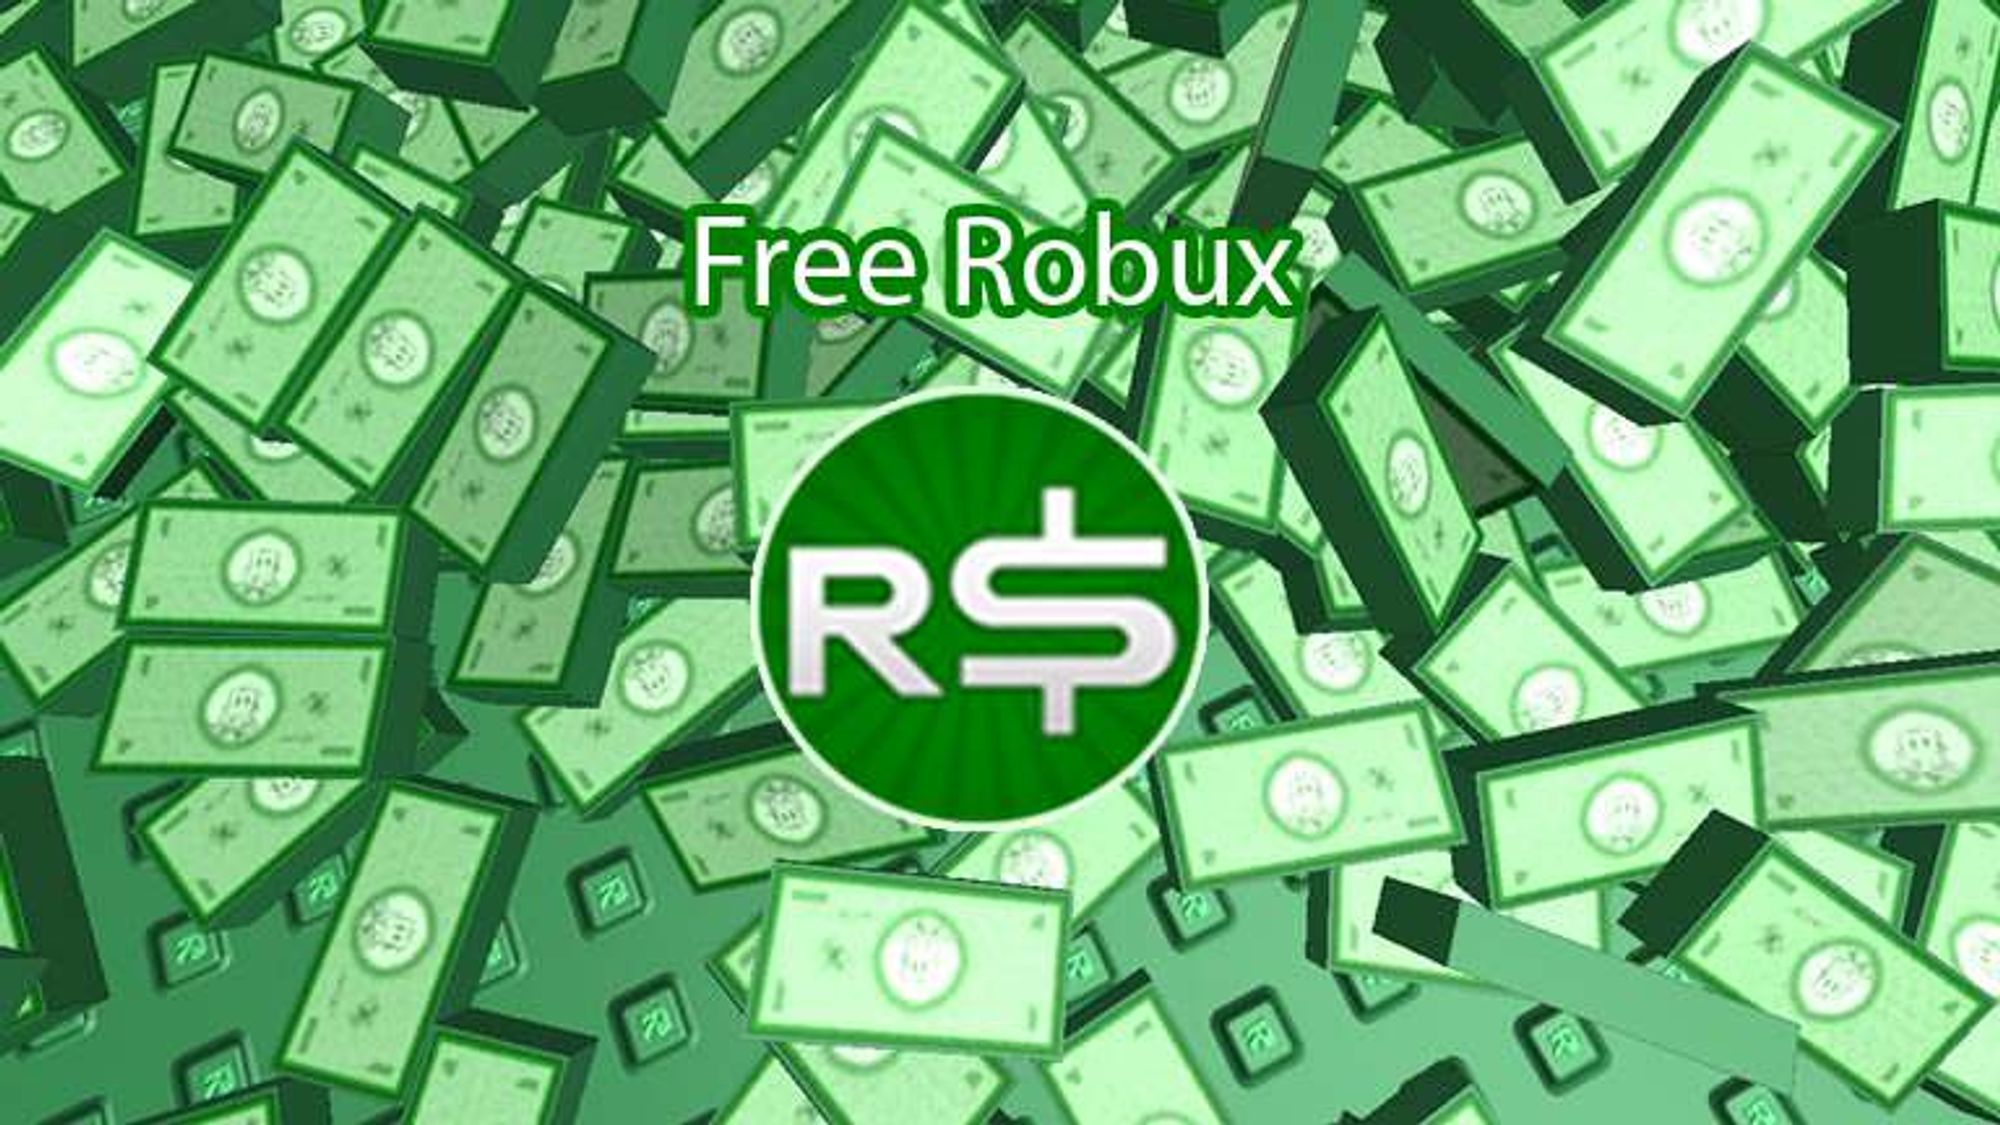 Roblox Robux Hack Free Robux Generator No Human Verification Or Survey - robux cheats hack no survey or human verify